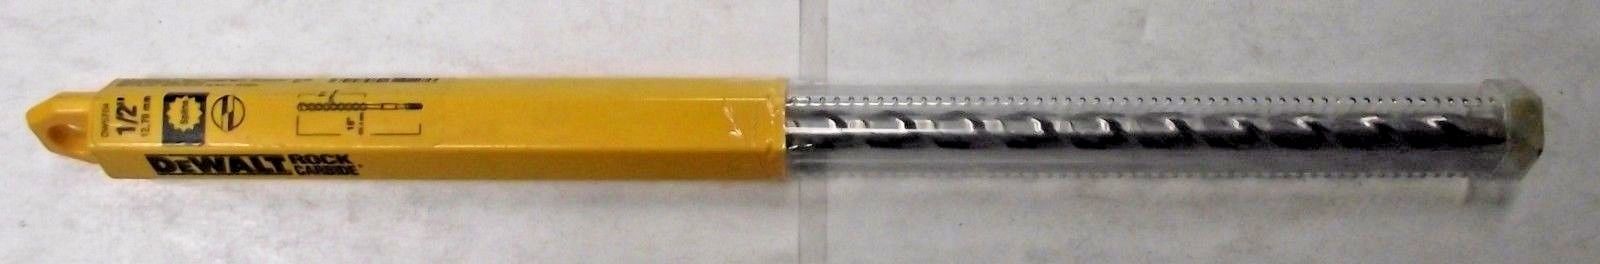 Dewalt DW5704 1/2" x 11" x 16" 2-Cutter Spline Shank Rotary Hammer Bit Germany